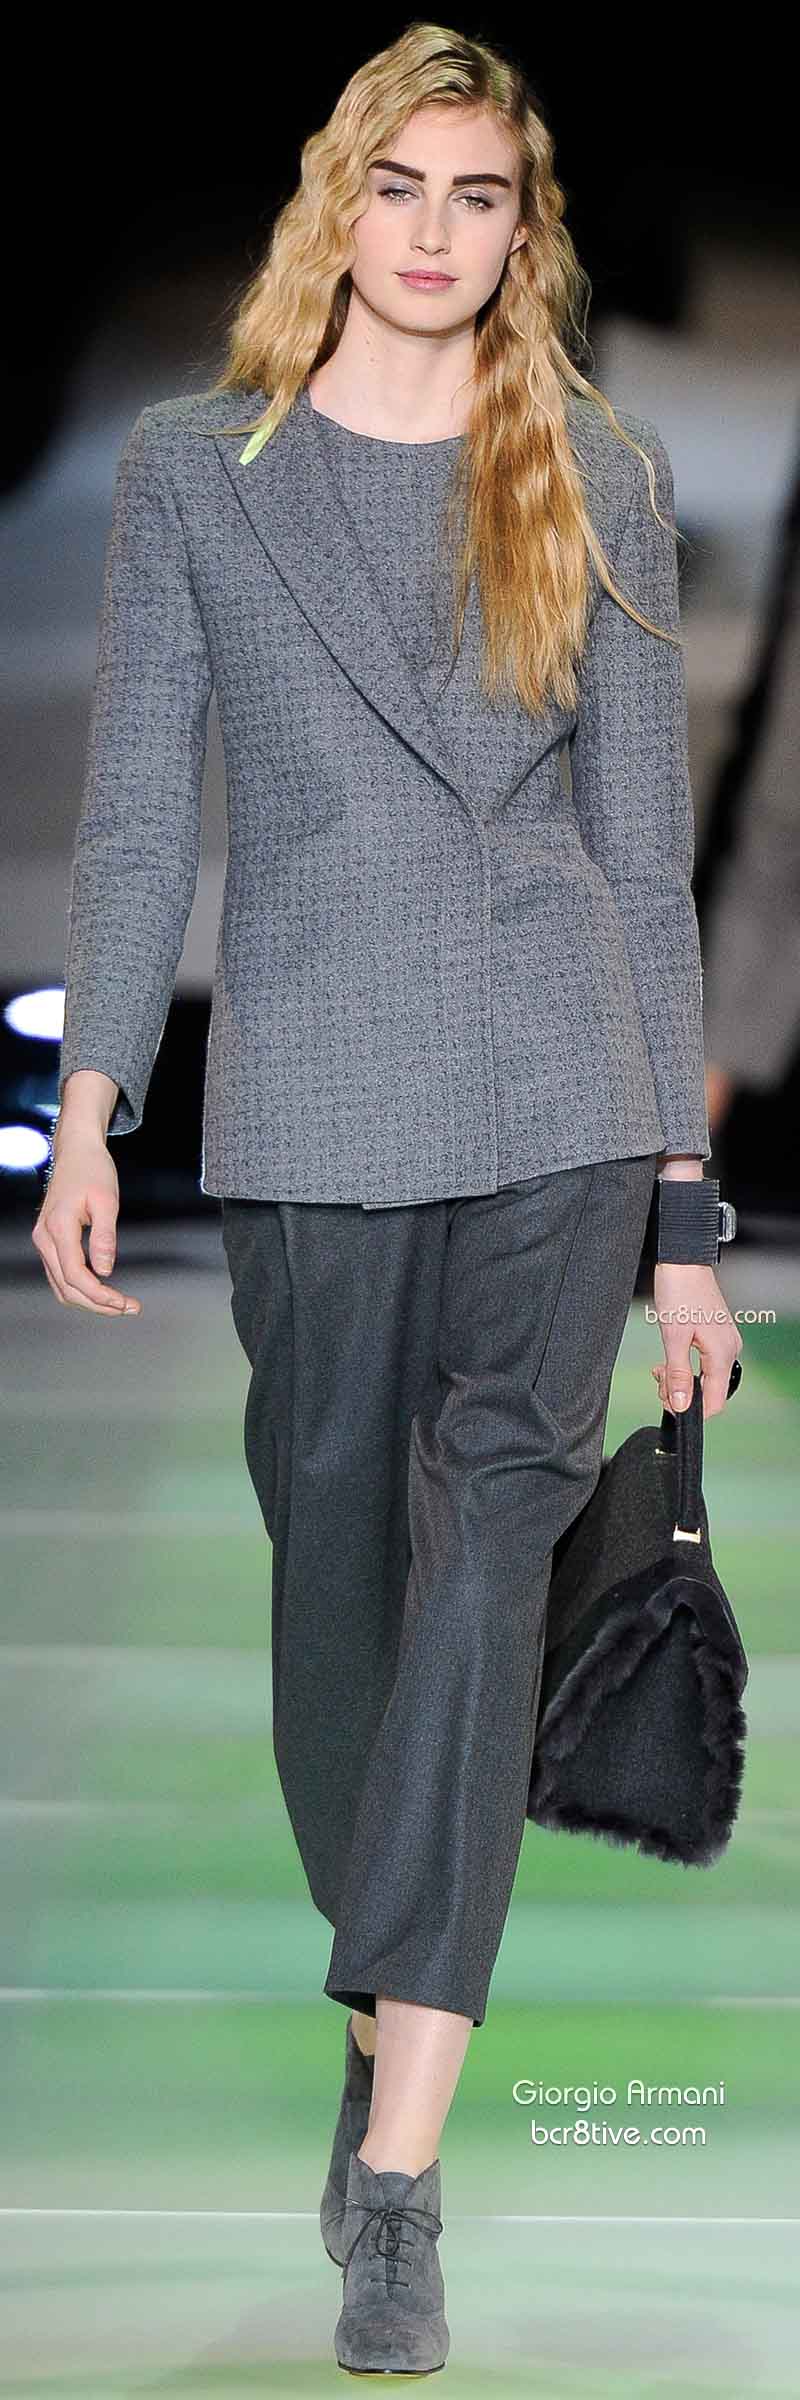 Fall 2014 Menswear Inspired Fashion - Giorgio Armani